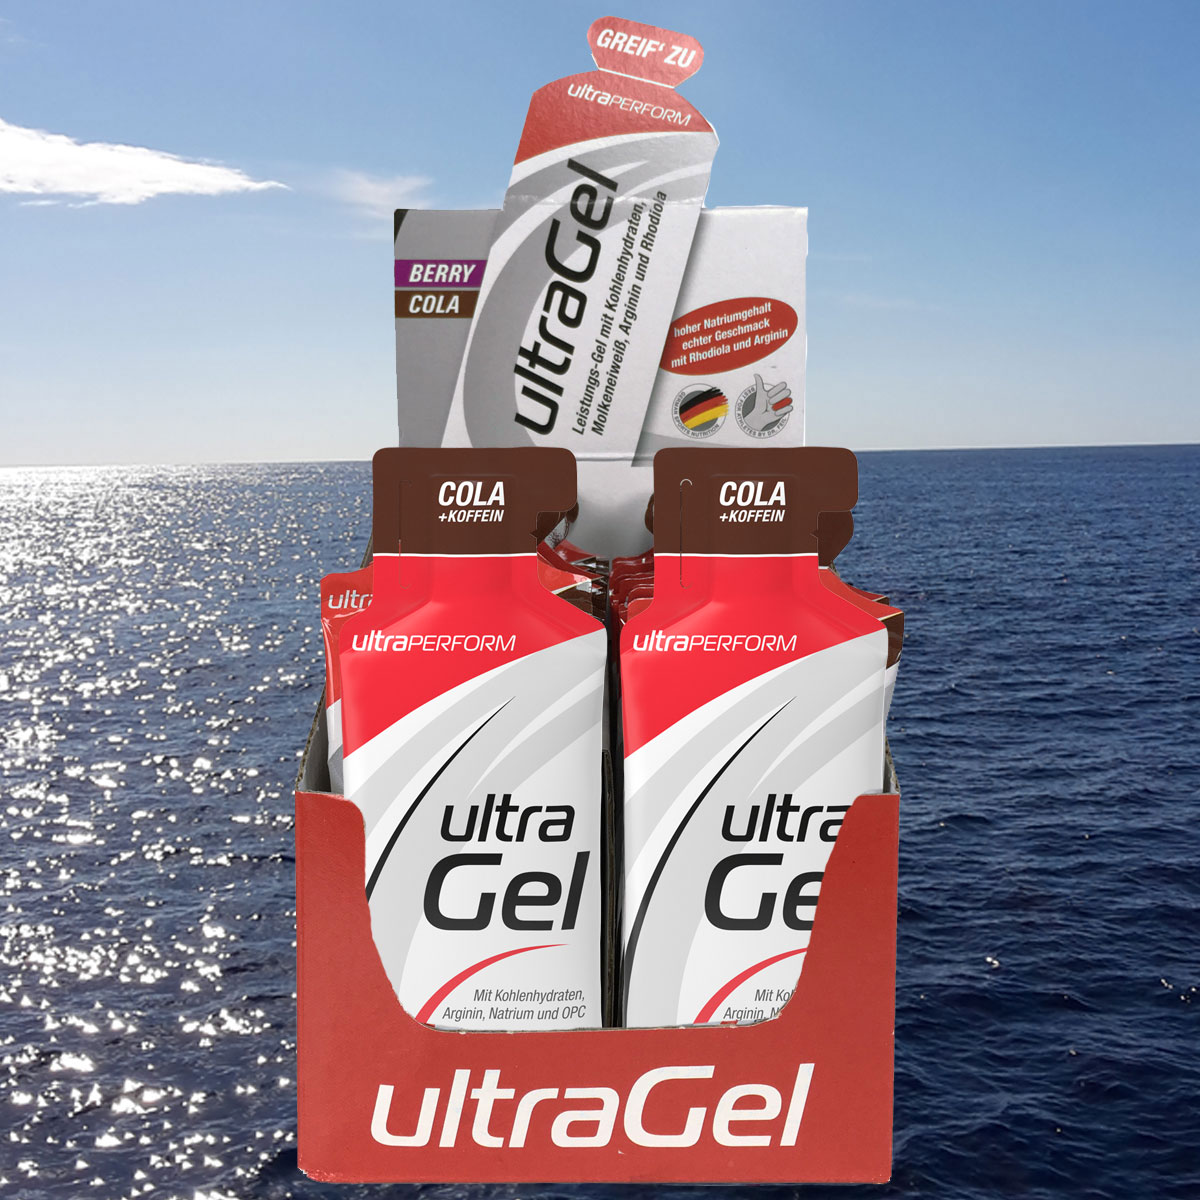 UltraSPORTS ultraPERFORM Gel Beutel 24x35g COLA+Coffein von ultraSPORTS